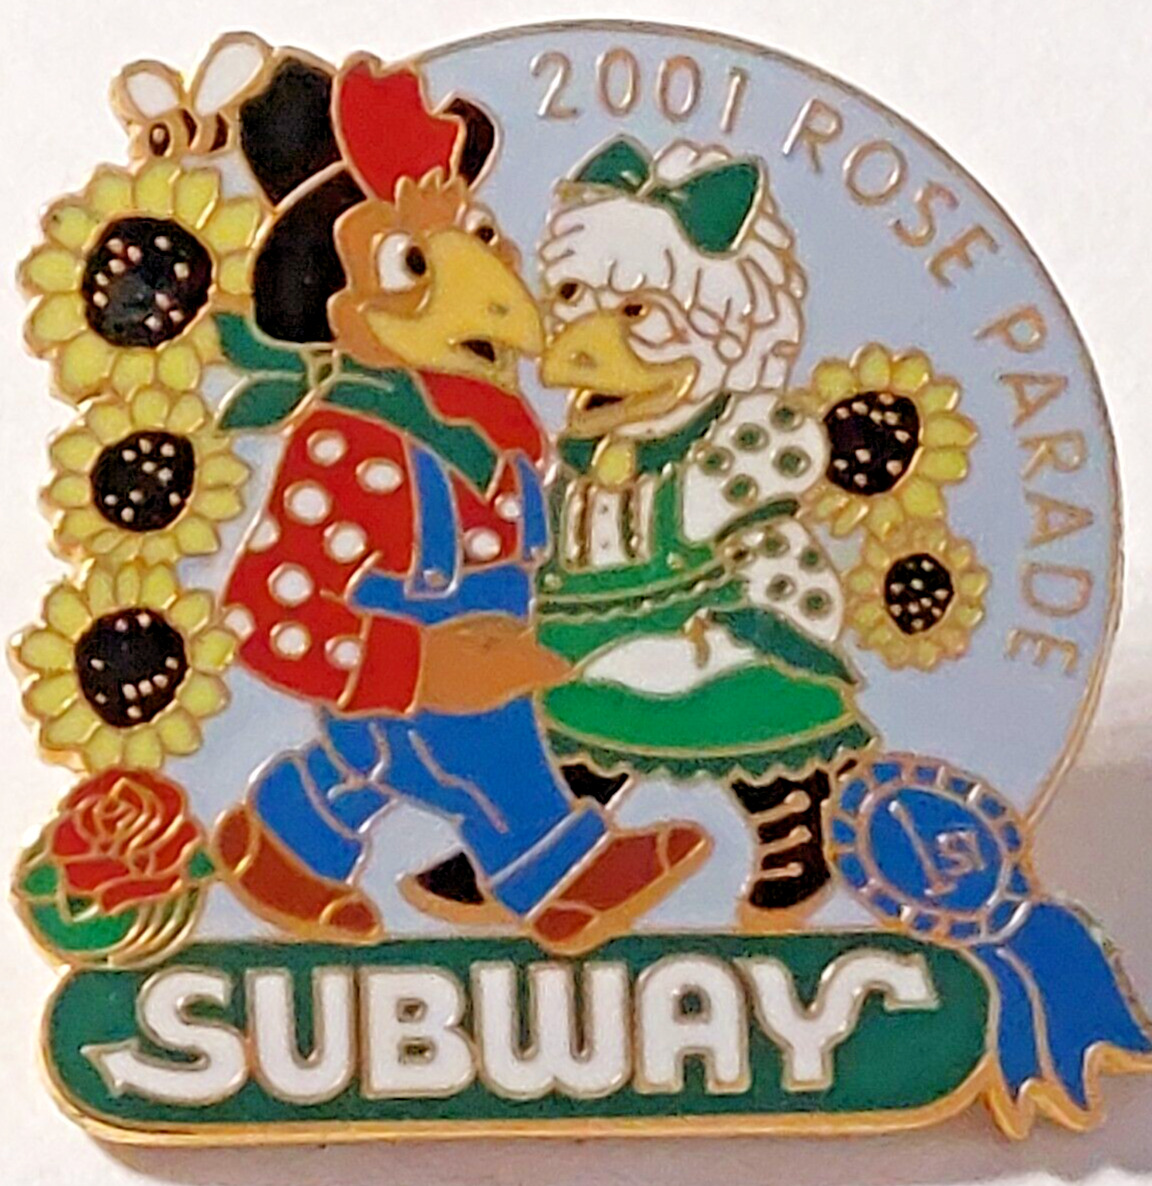 Rose Parade 2001 Subway Restaurant Lapel Pin